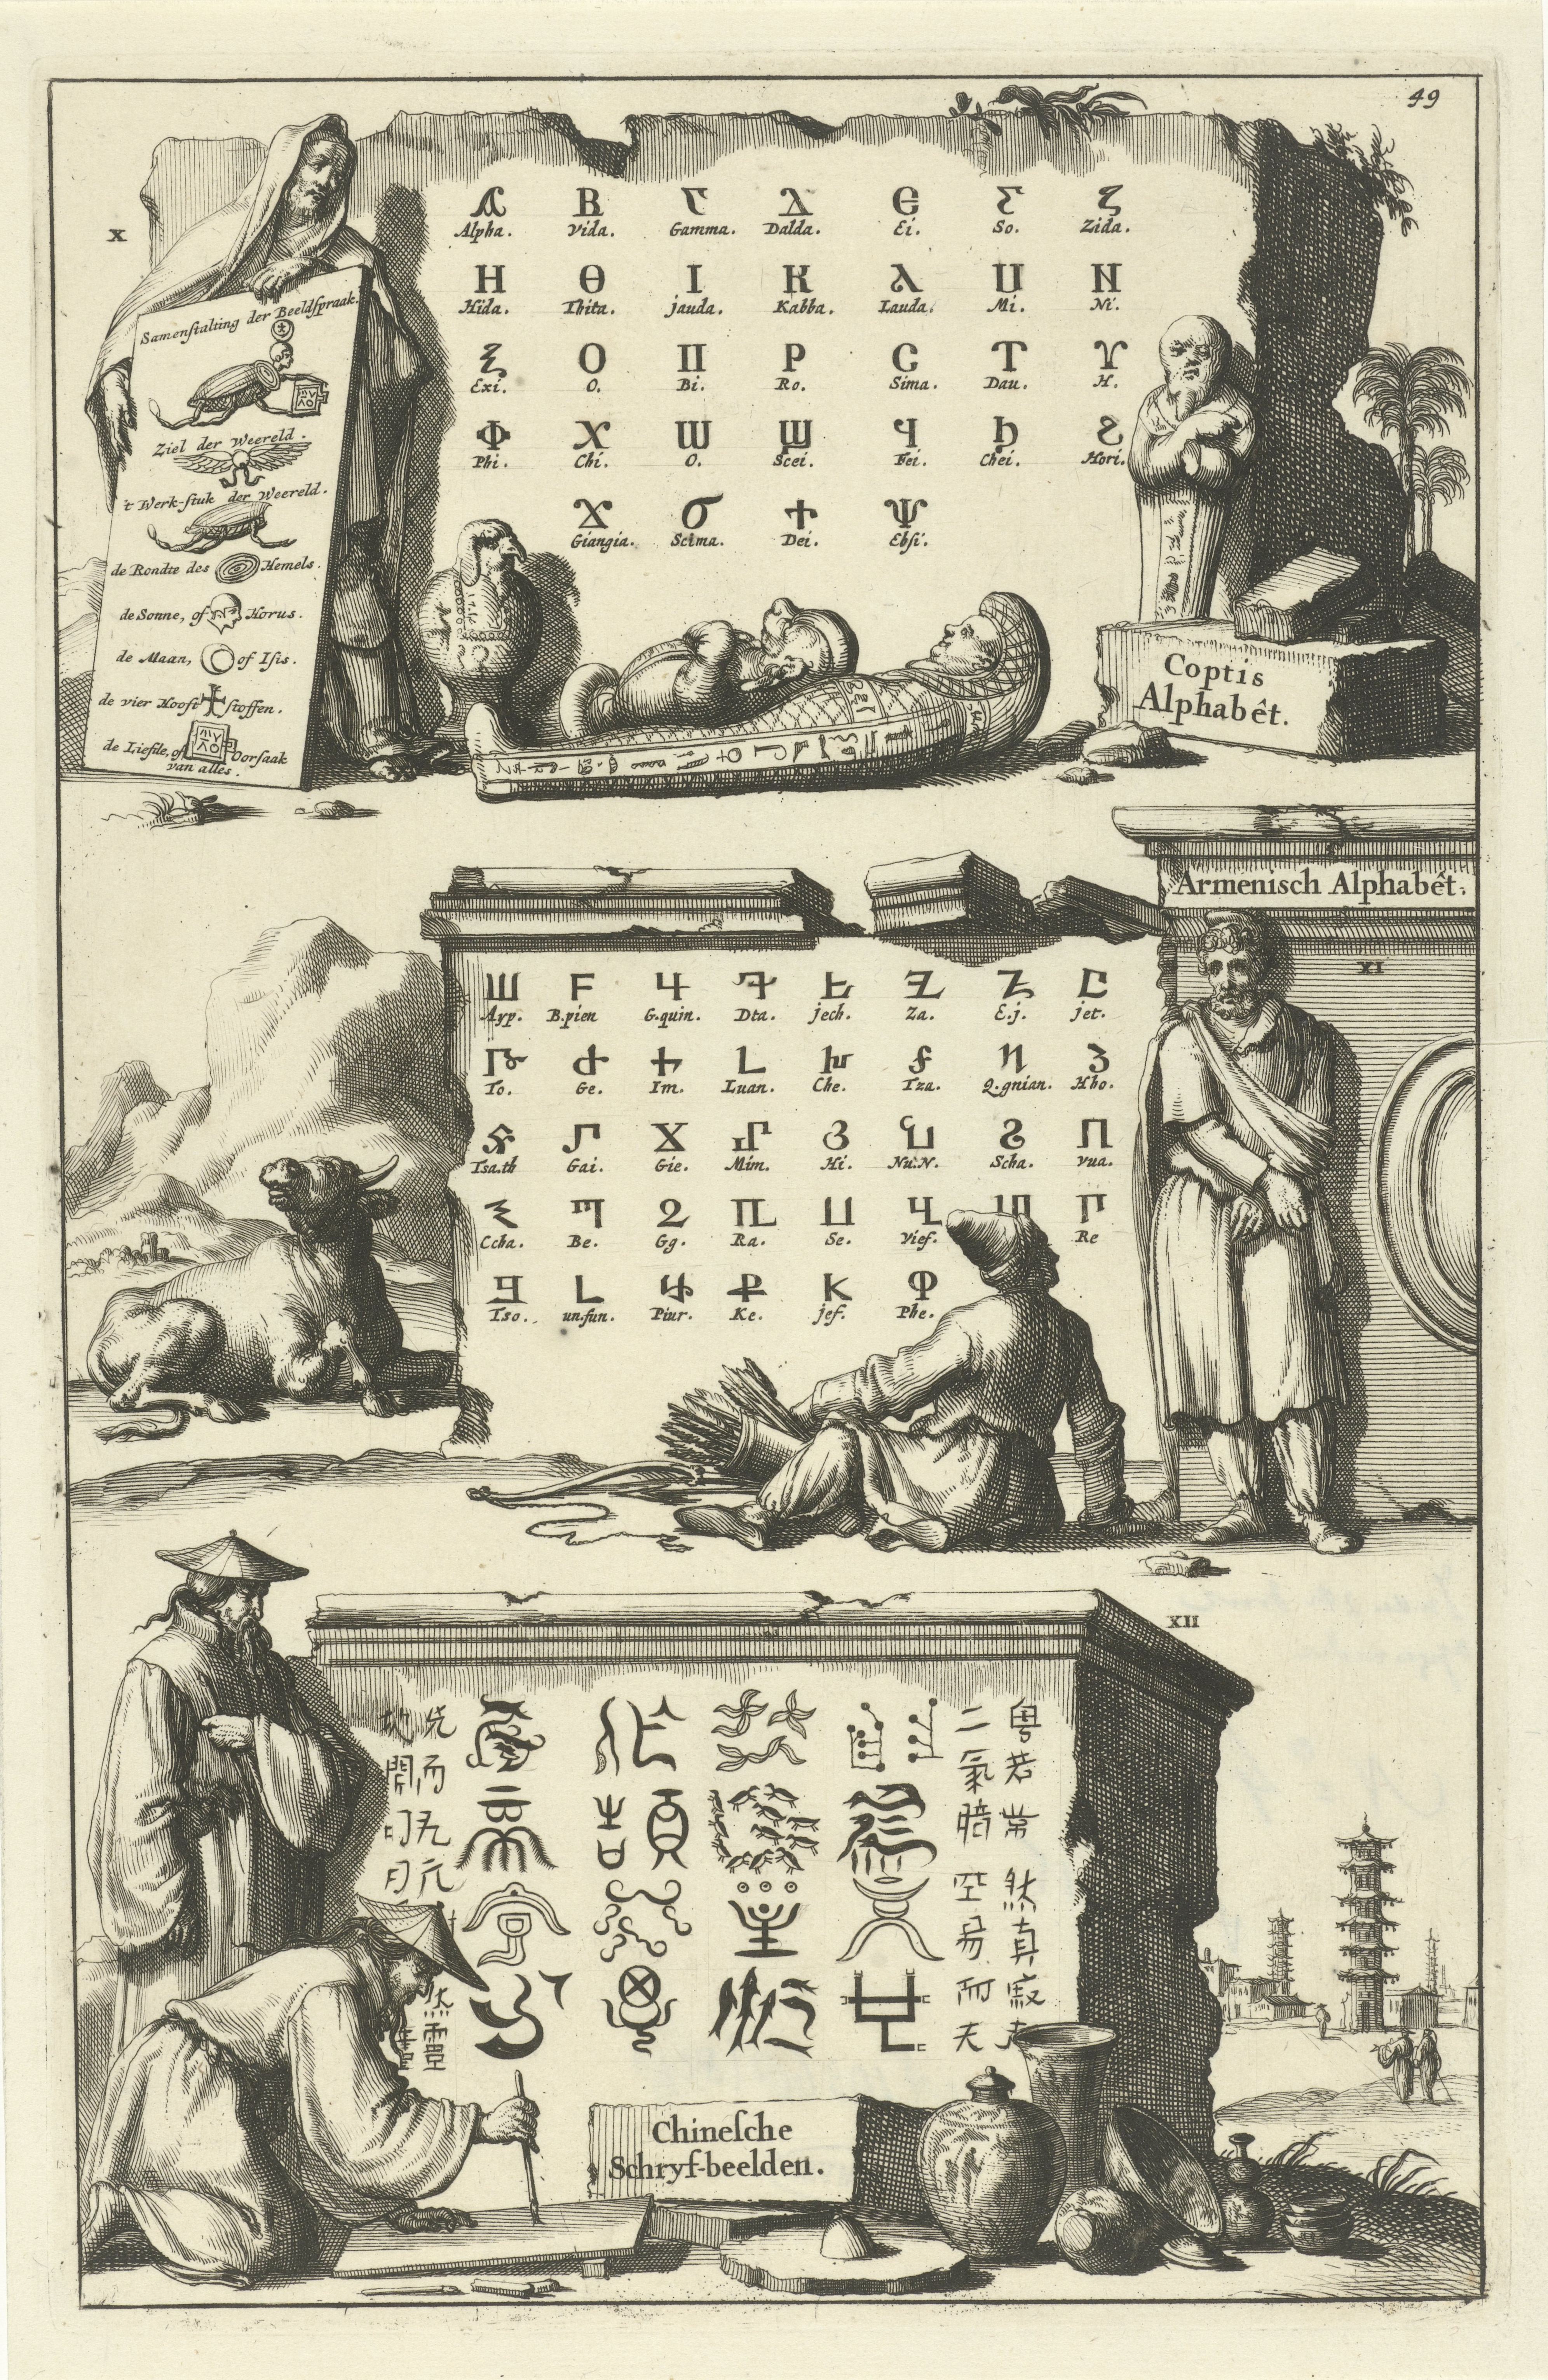 Coptic, Armenian and Chinese alphabet, Jan Luyken, 1690